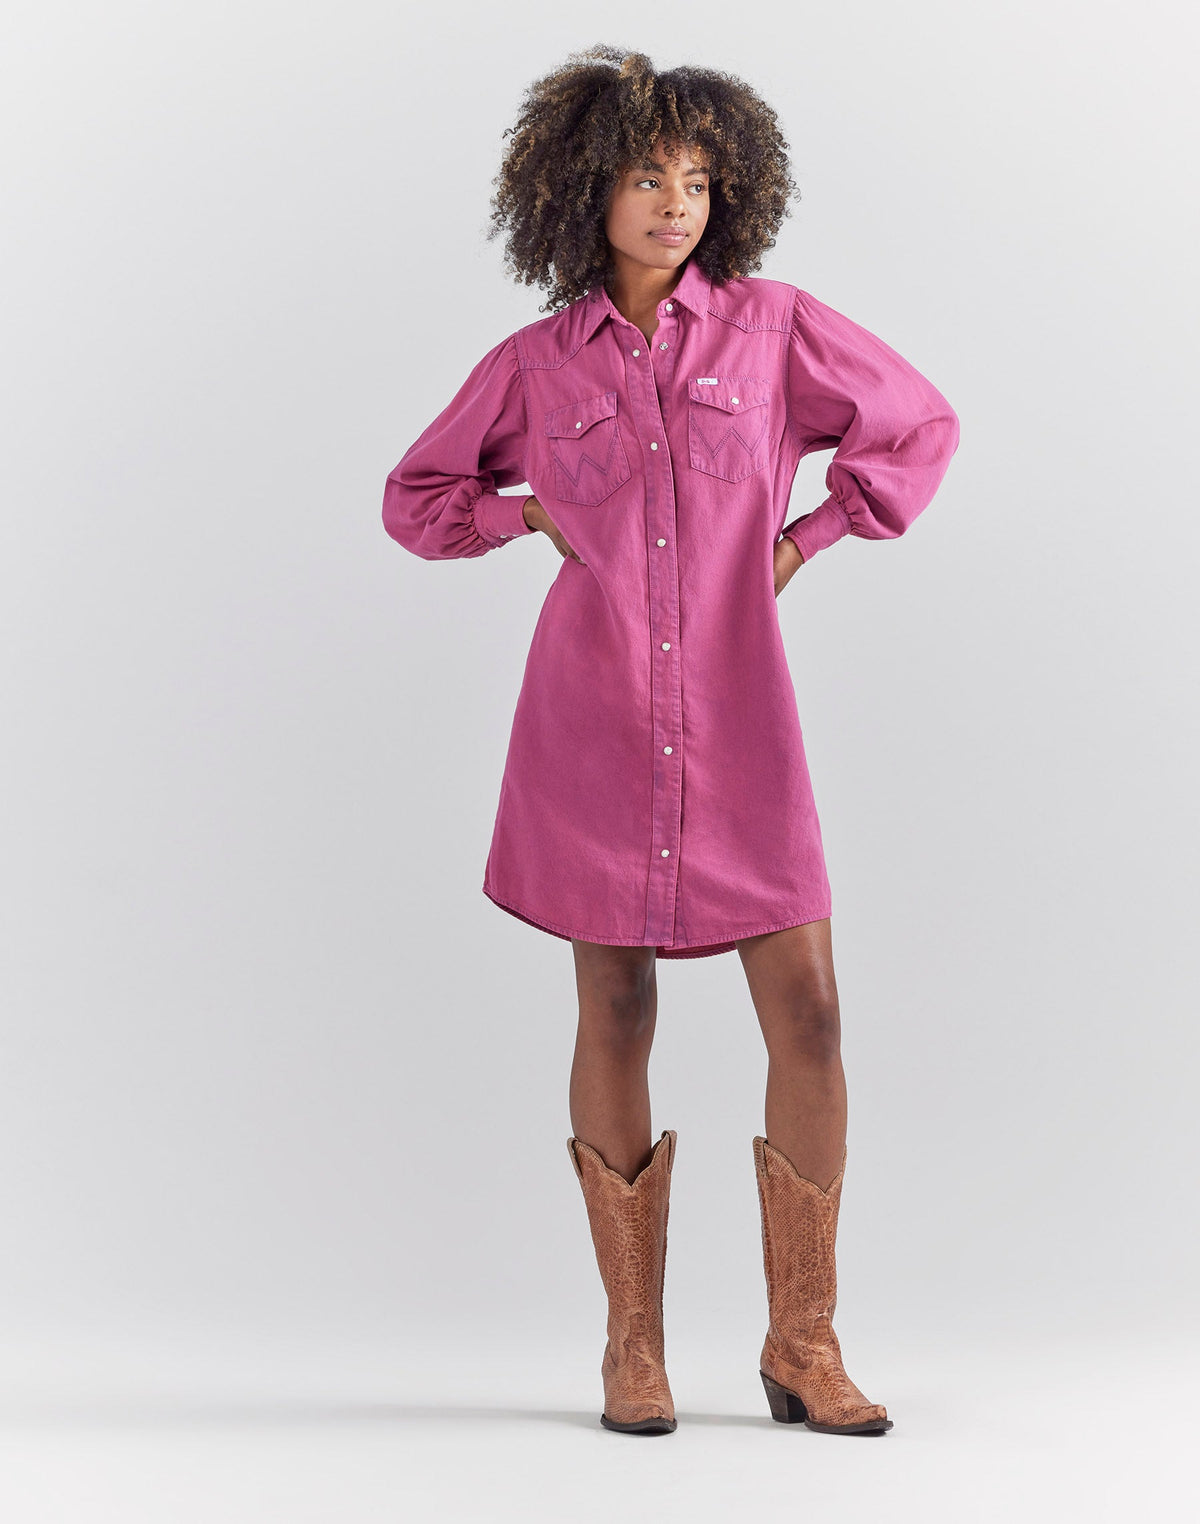 Wrangler X Barbie™ - Shirt Dress in Dreamy Pink